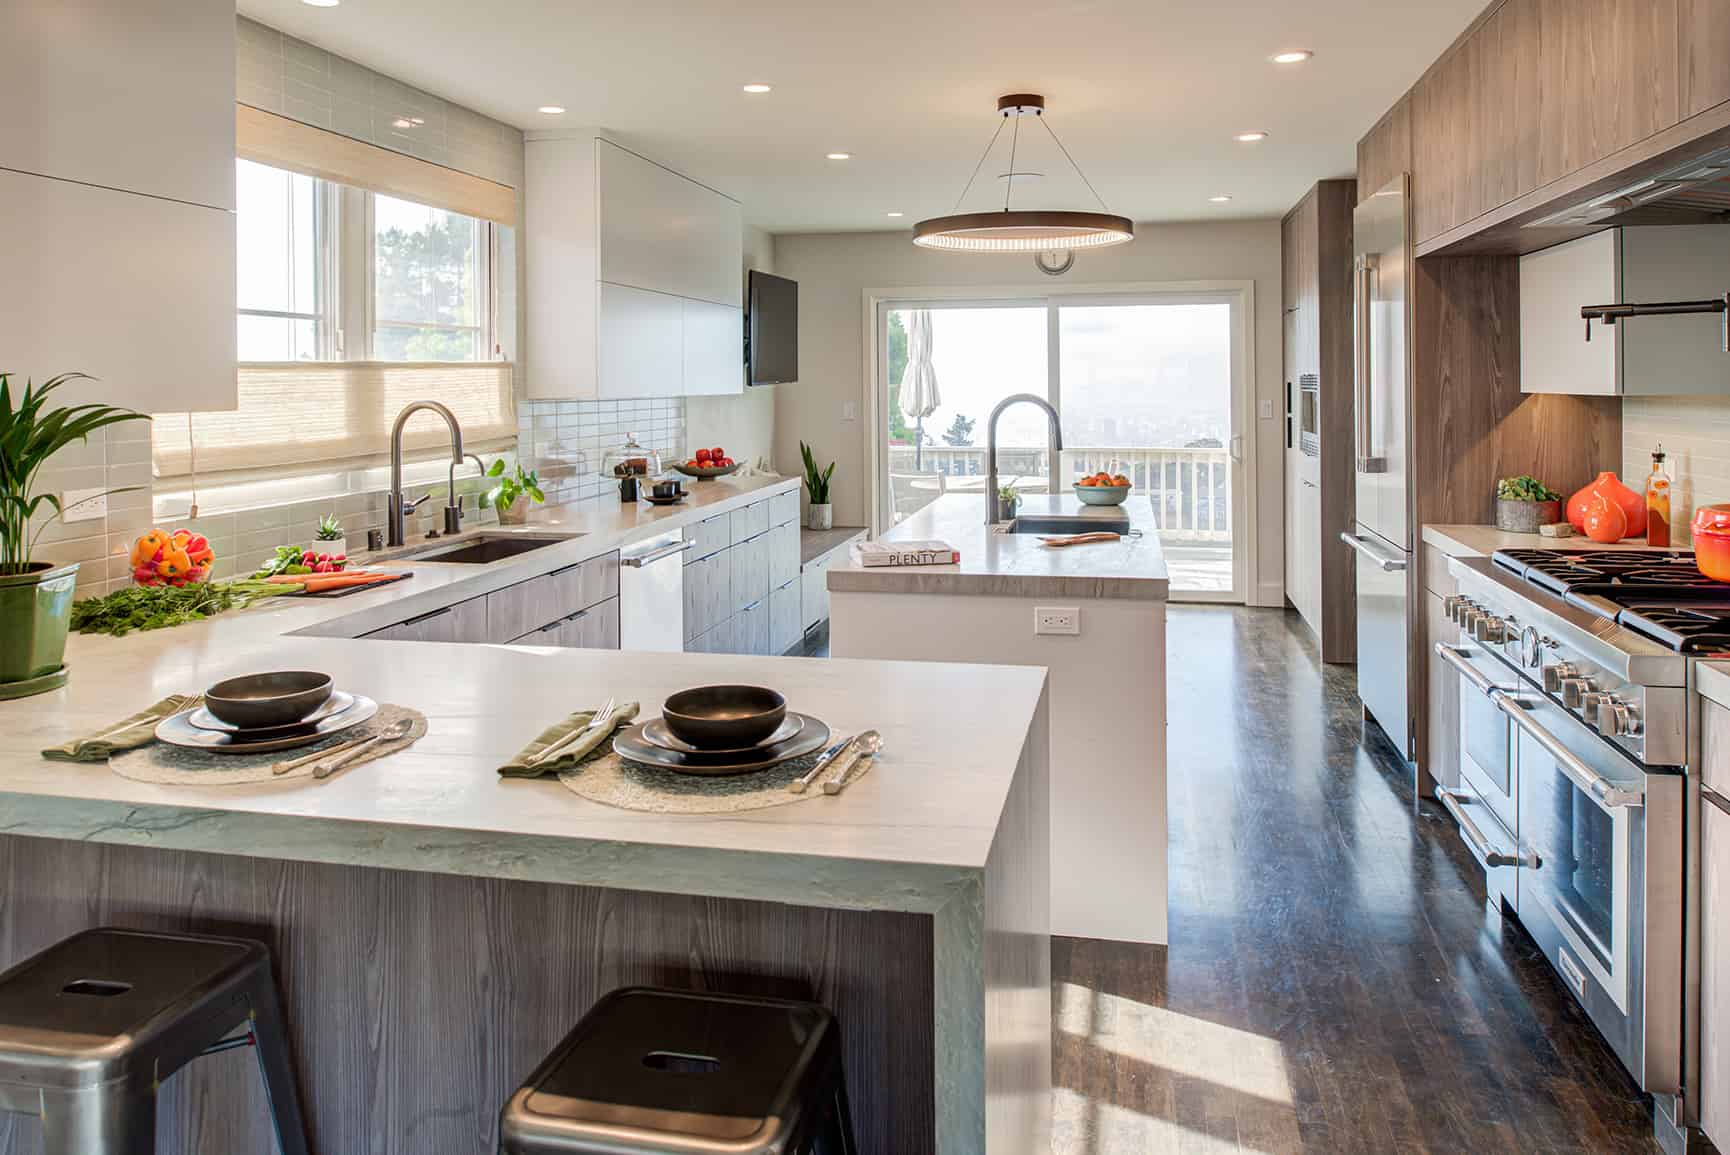 Modern kitchen remodel with dark hardwood floors.